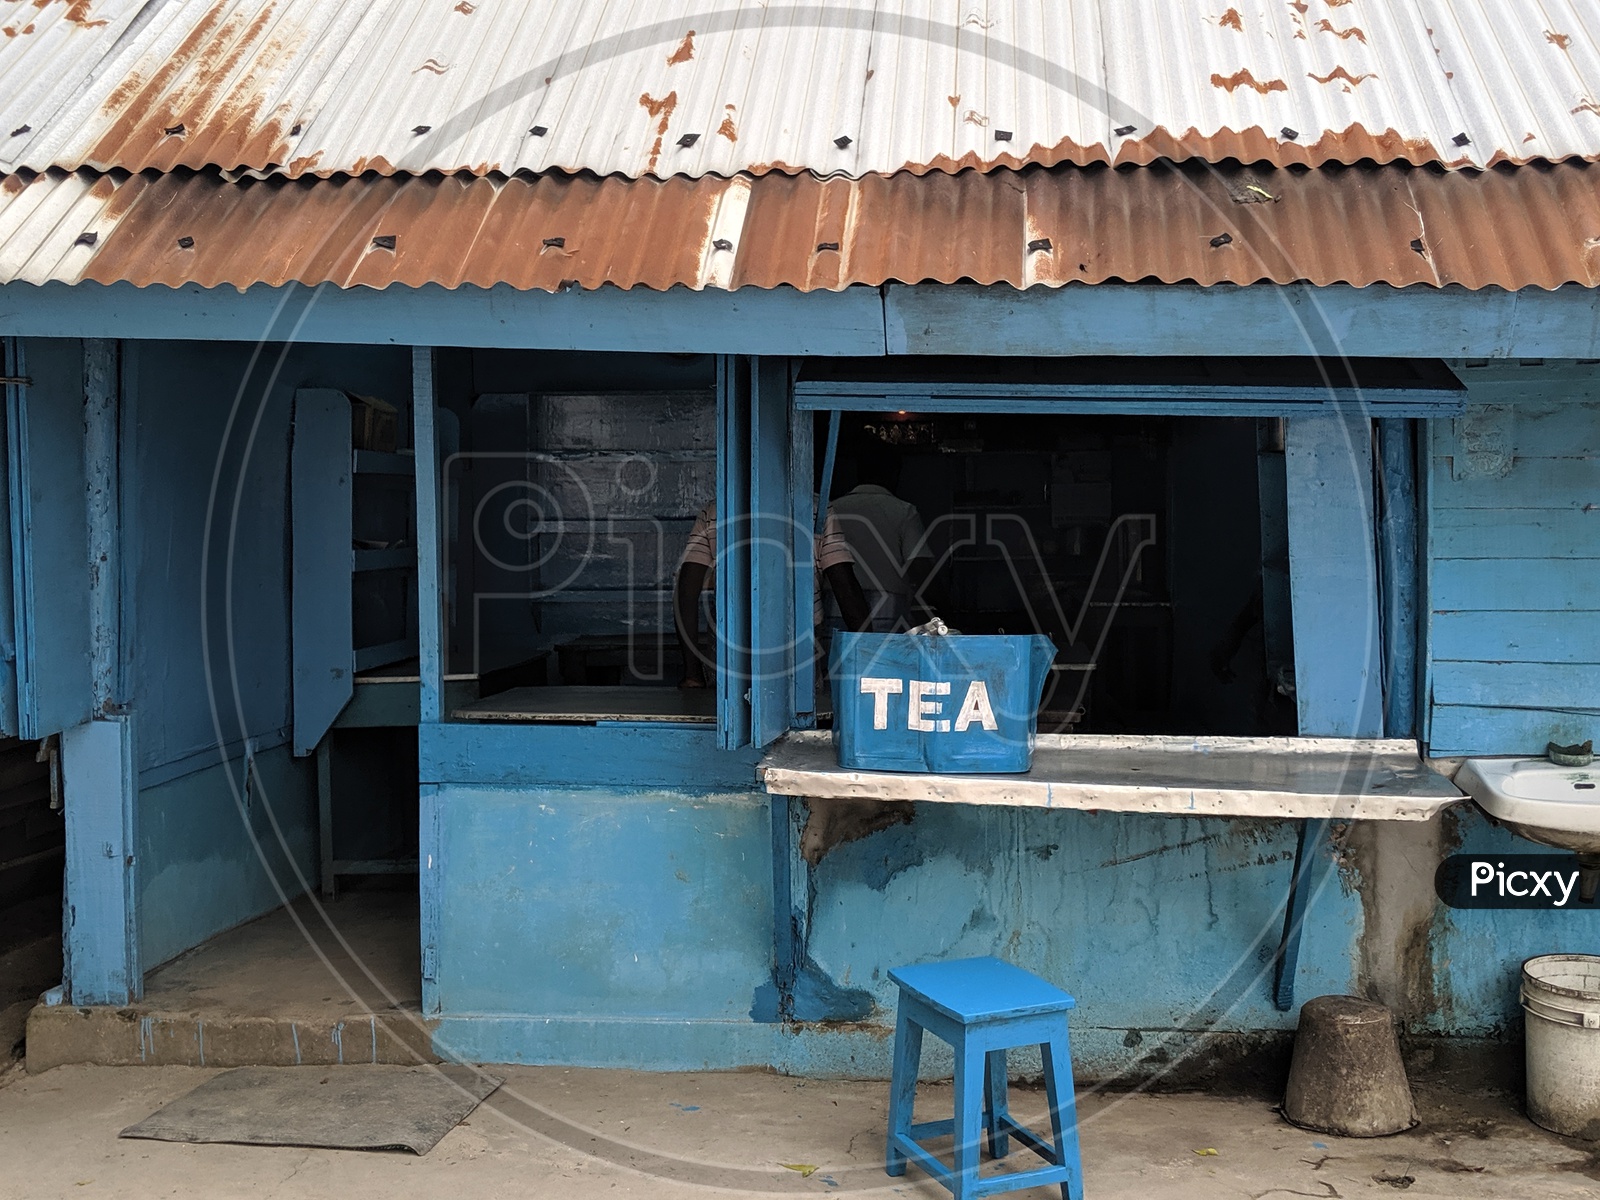 Tea stall in Andaman